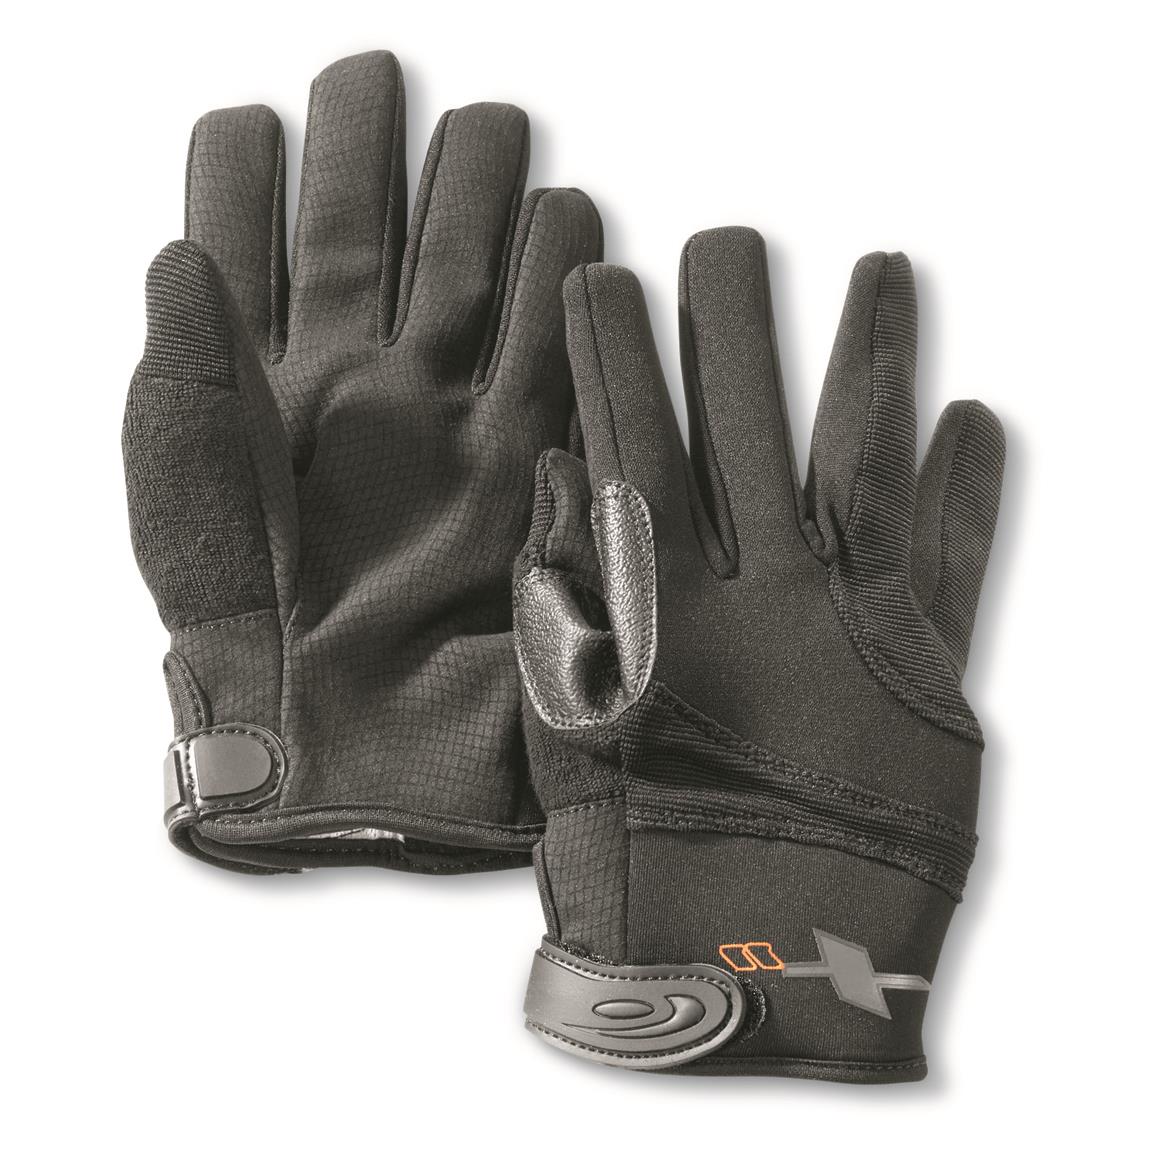 Hatch SGX11 Street Guard Cut Resistant Police Duty Gloves